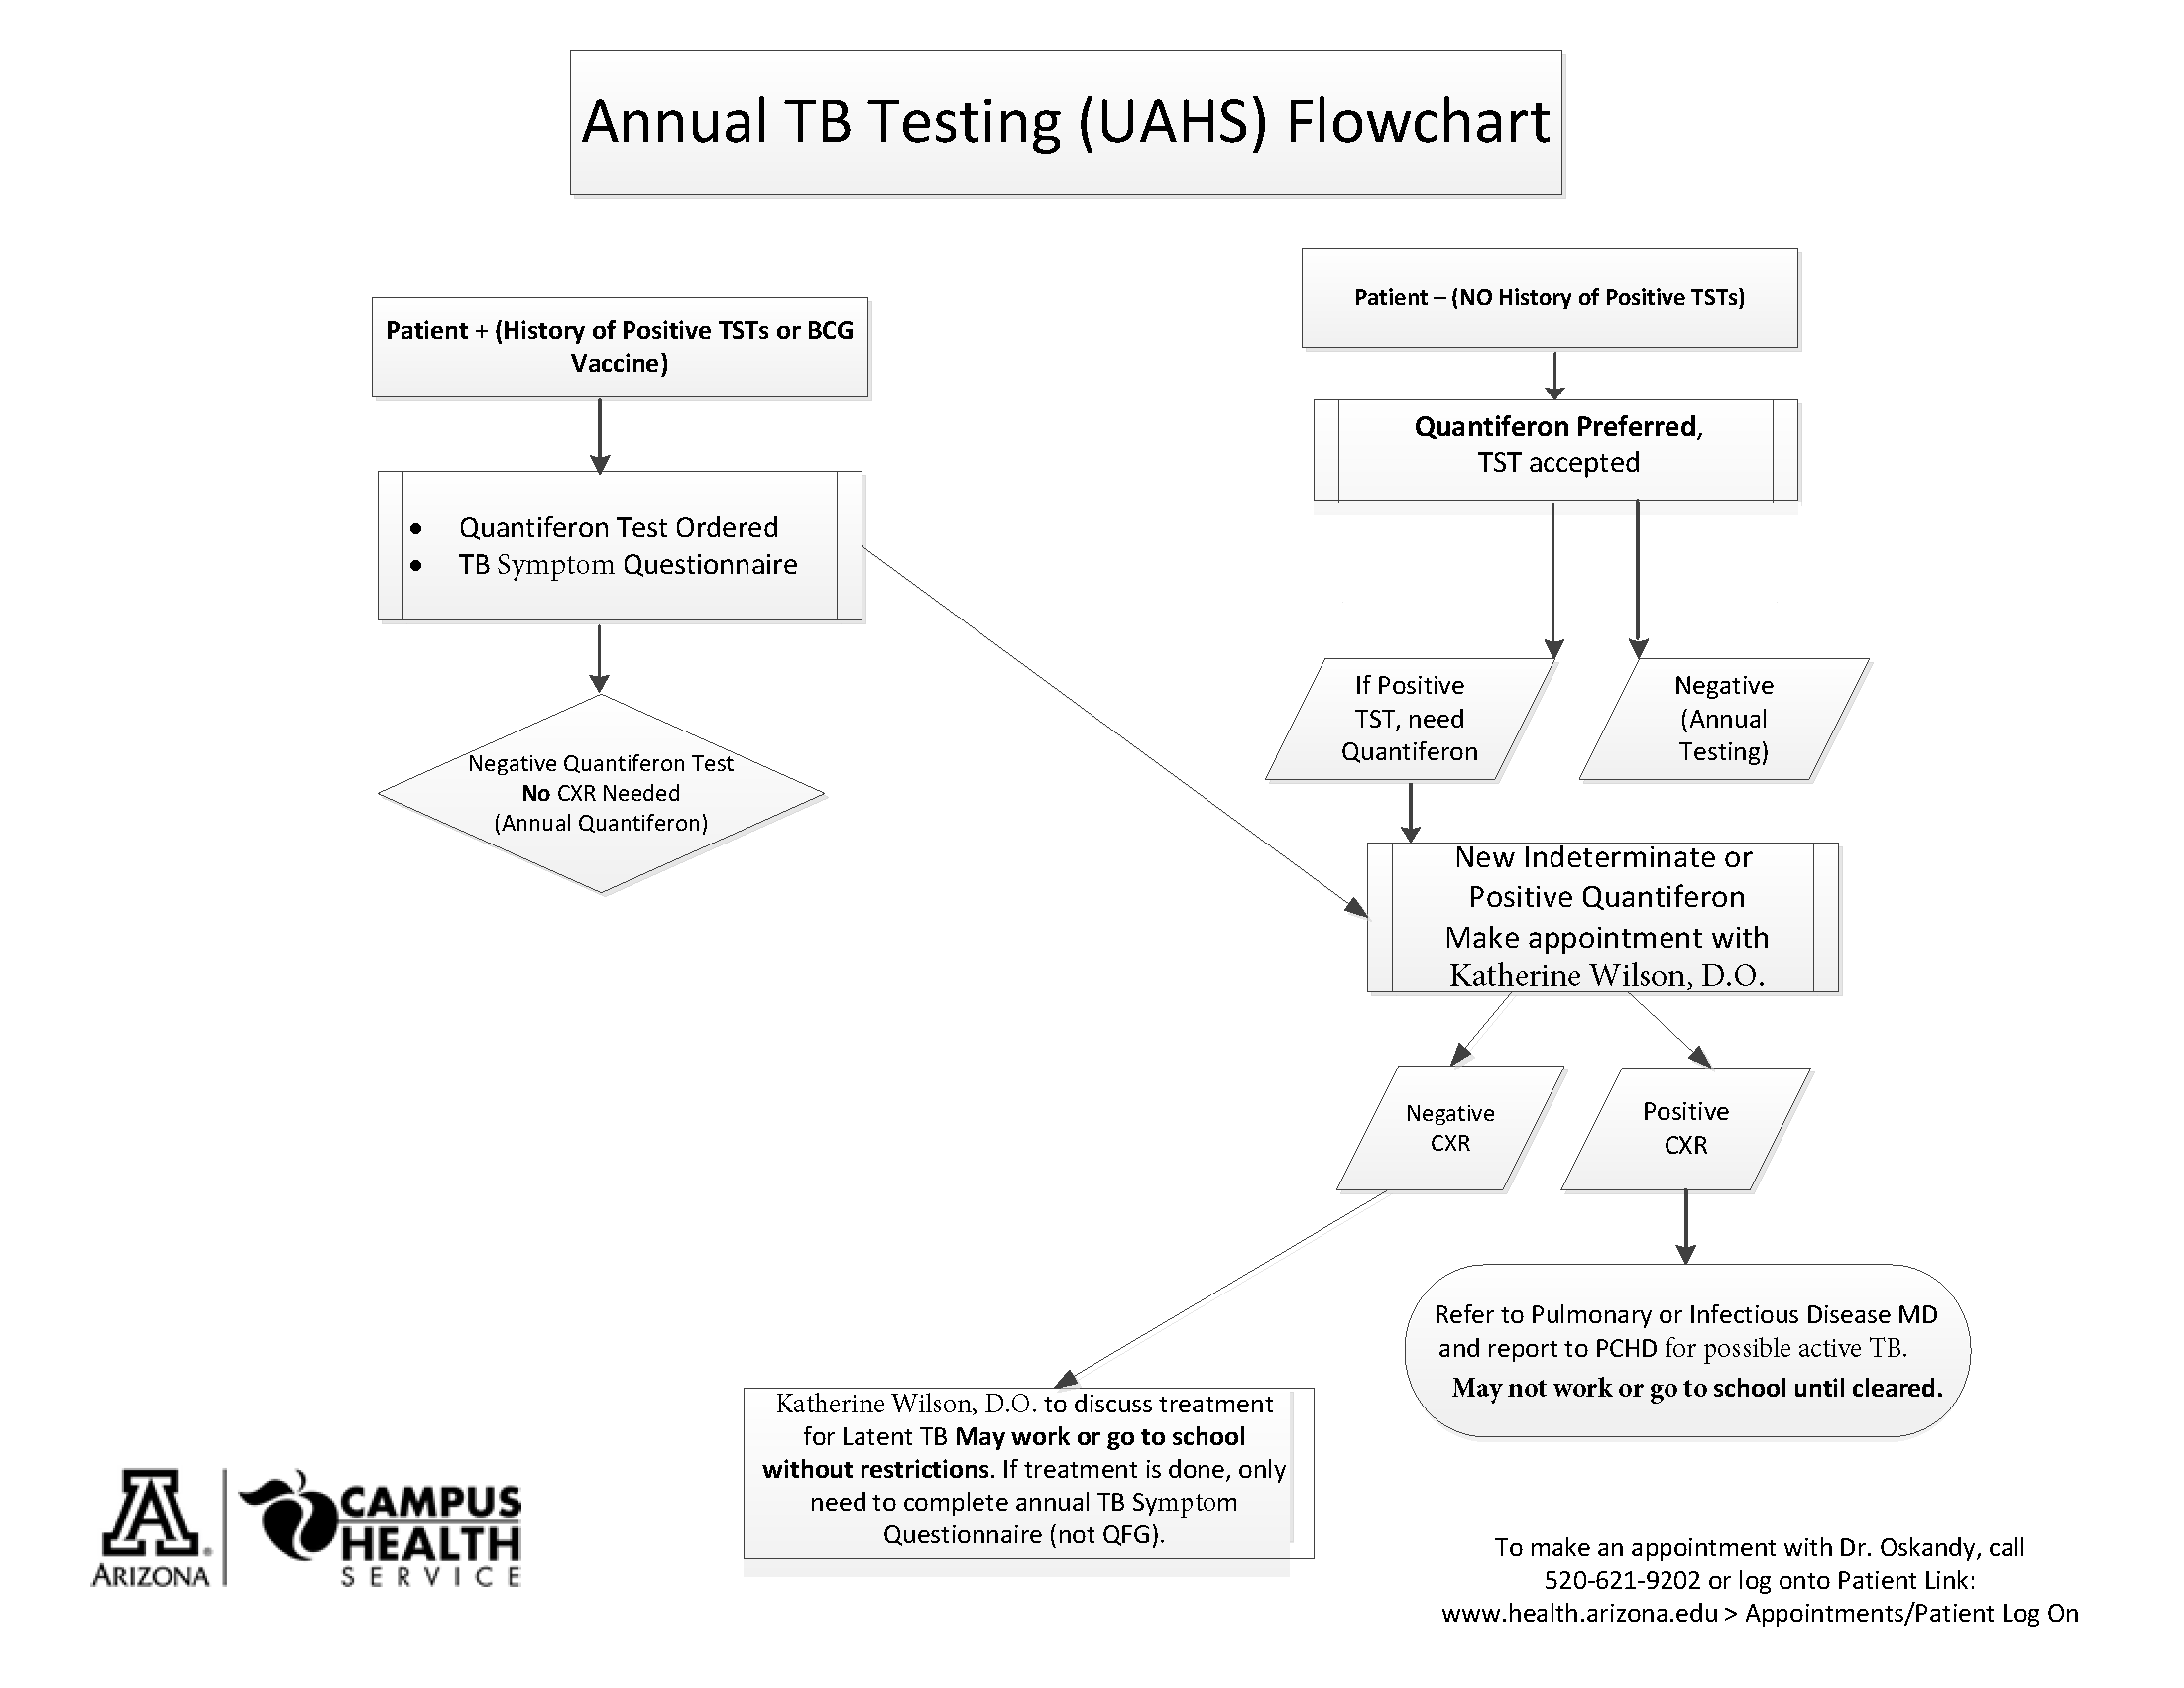 Annual TB Testing UAHS Flowchart 